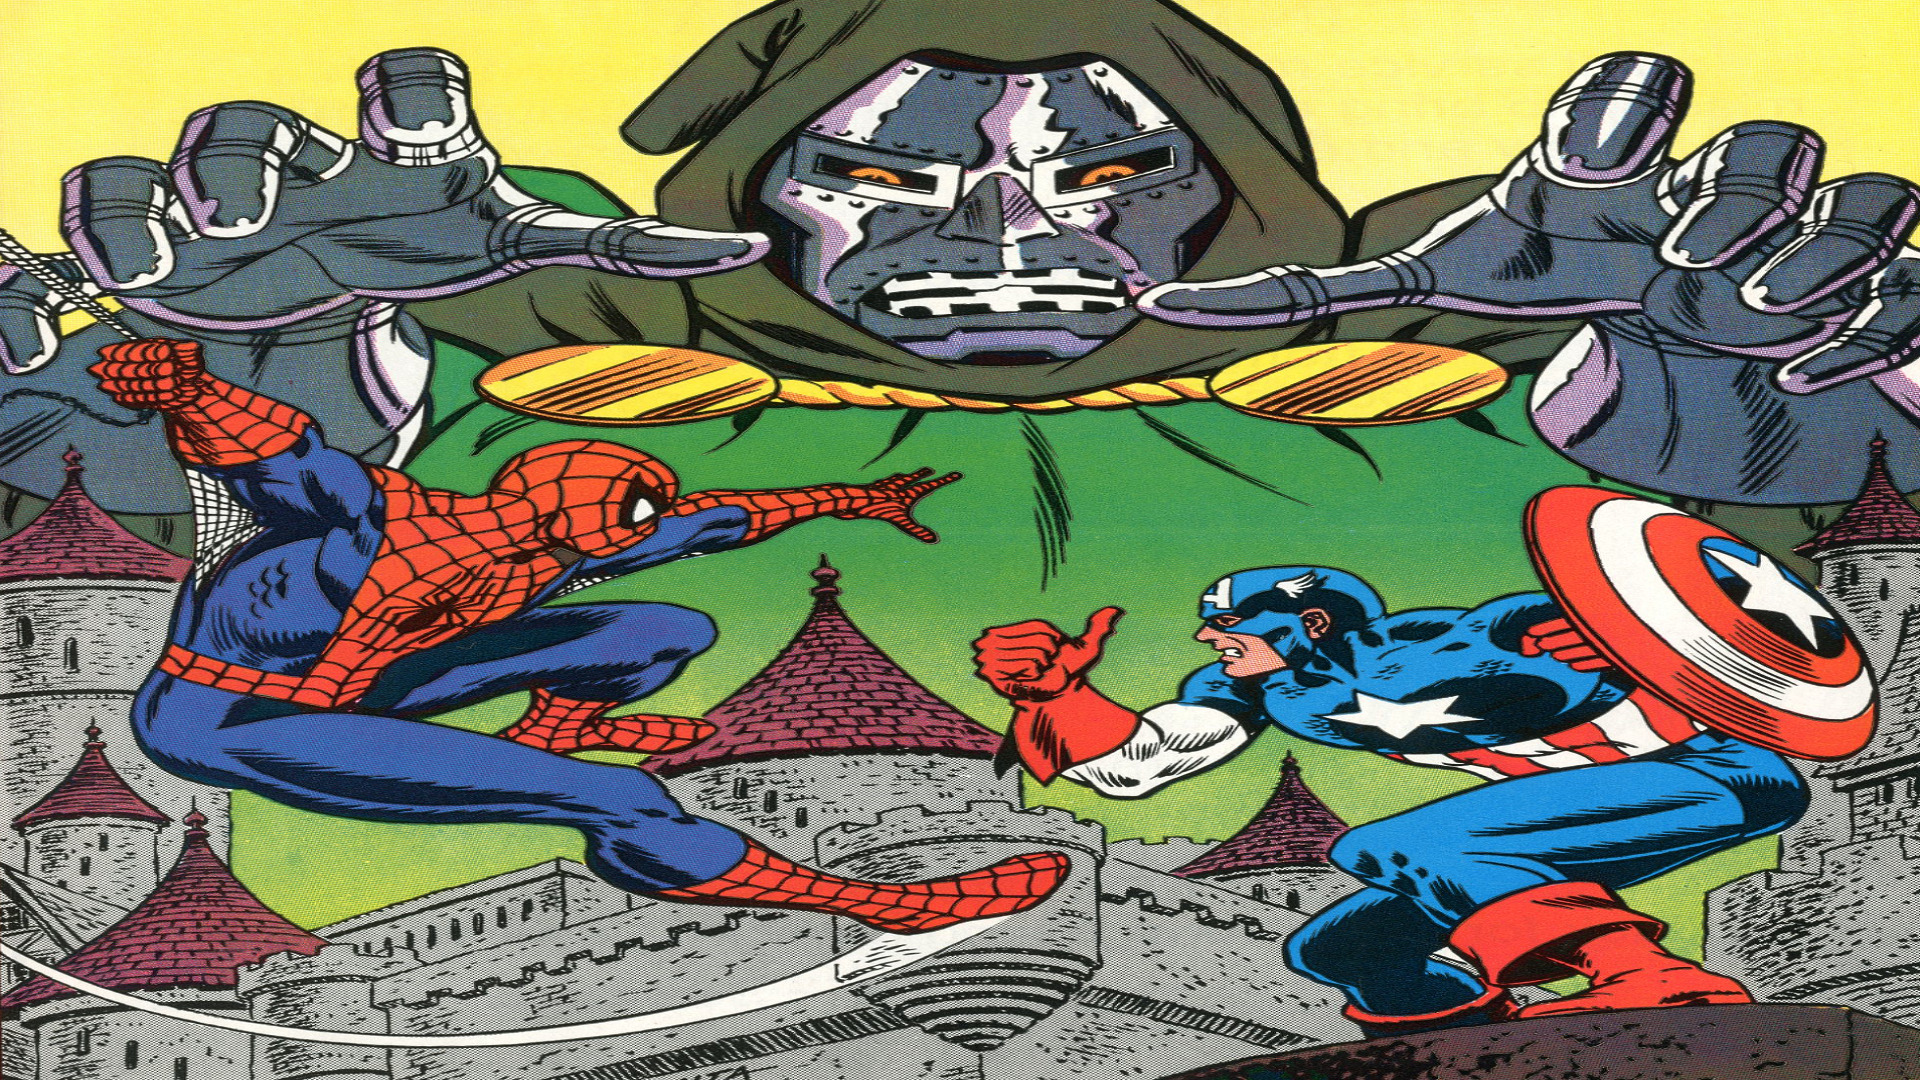 The Amazing Spider-Man and Captain America in Dr. Doom's Revenge!